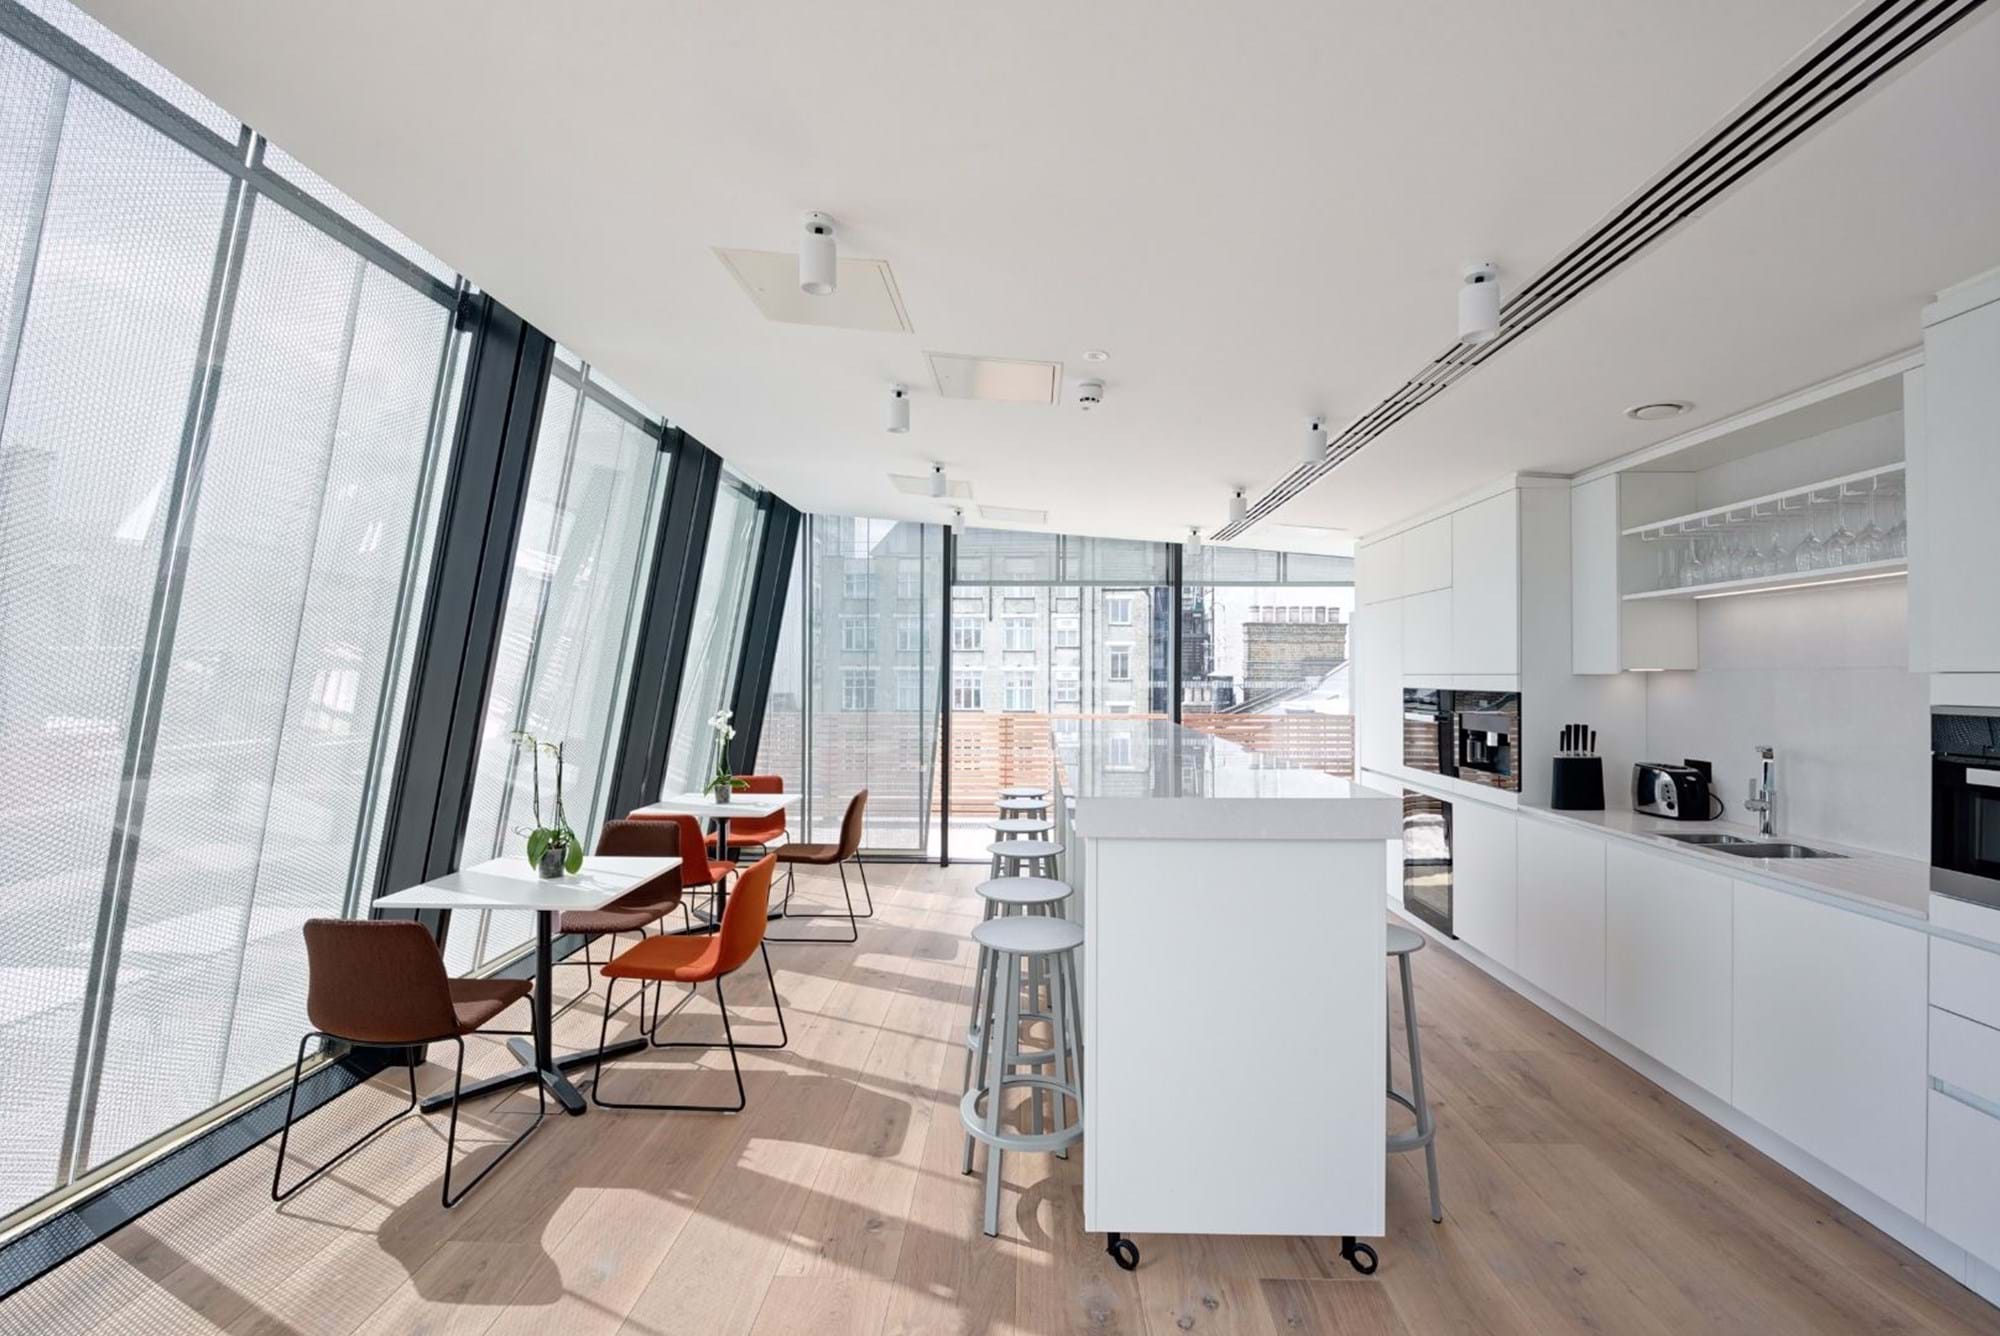 Modus Workspace office design, fit out and refurbishment - Craigewan - Graigewan 06 highres sRGB.jpg